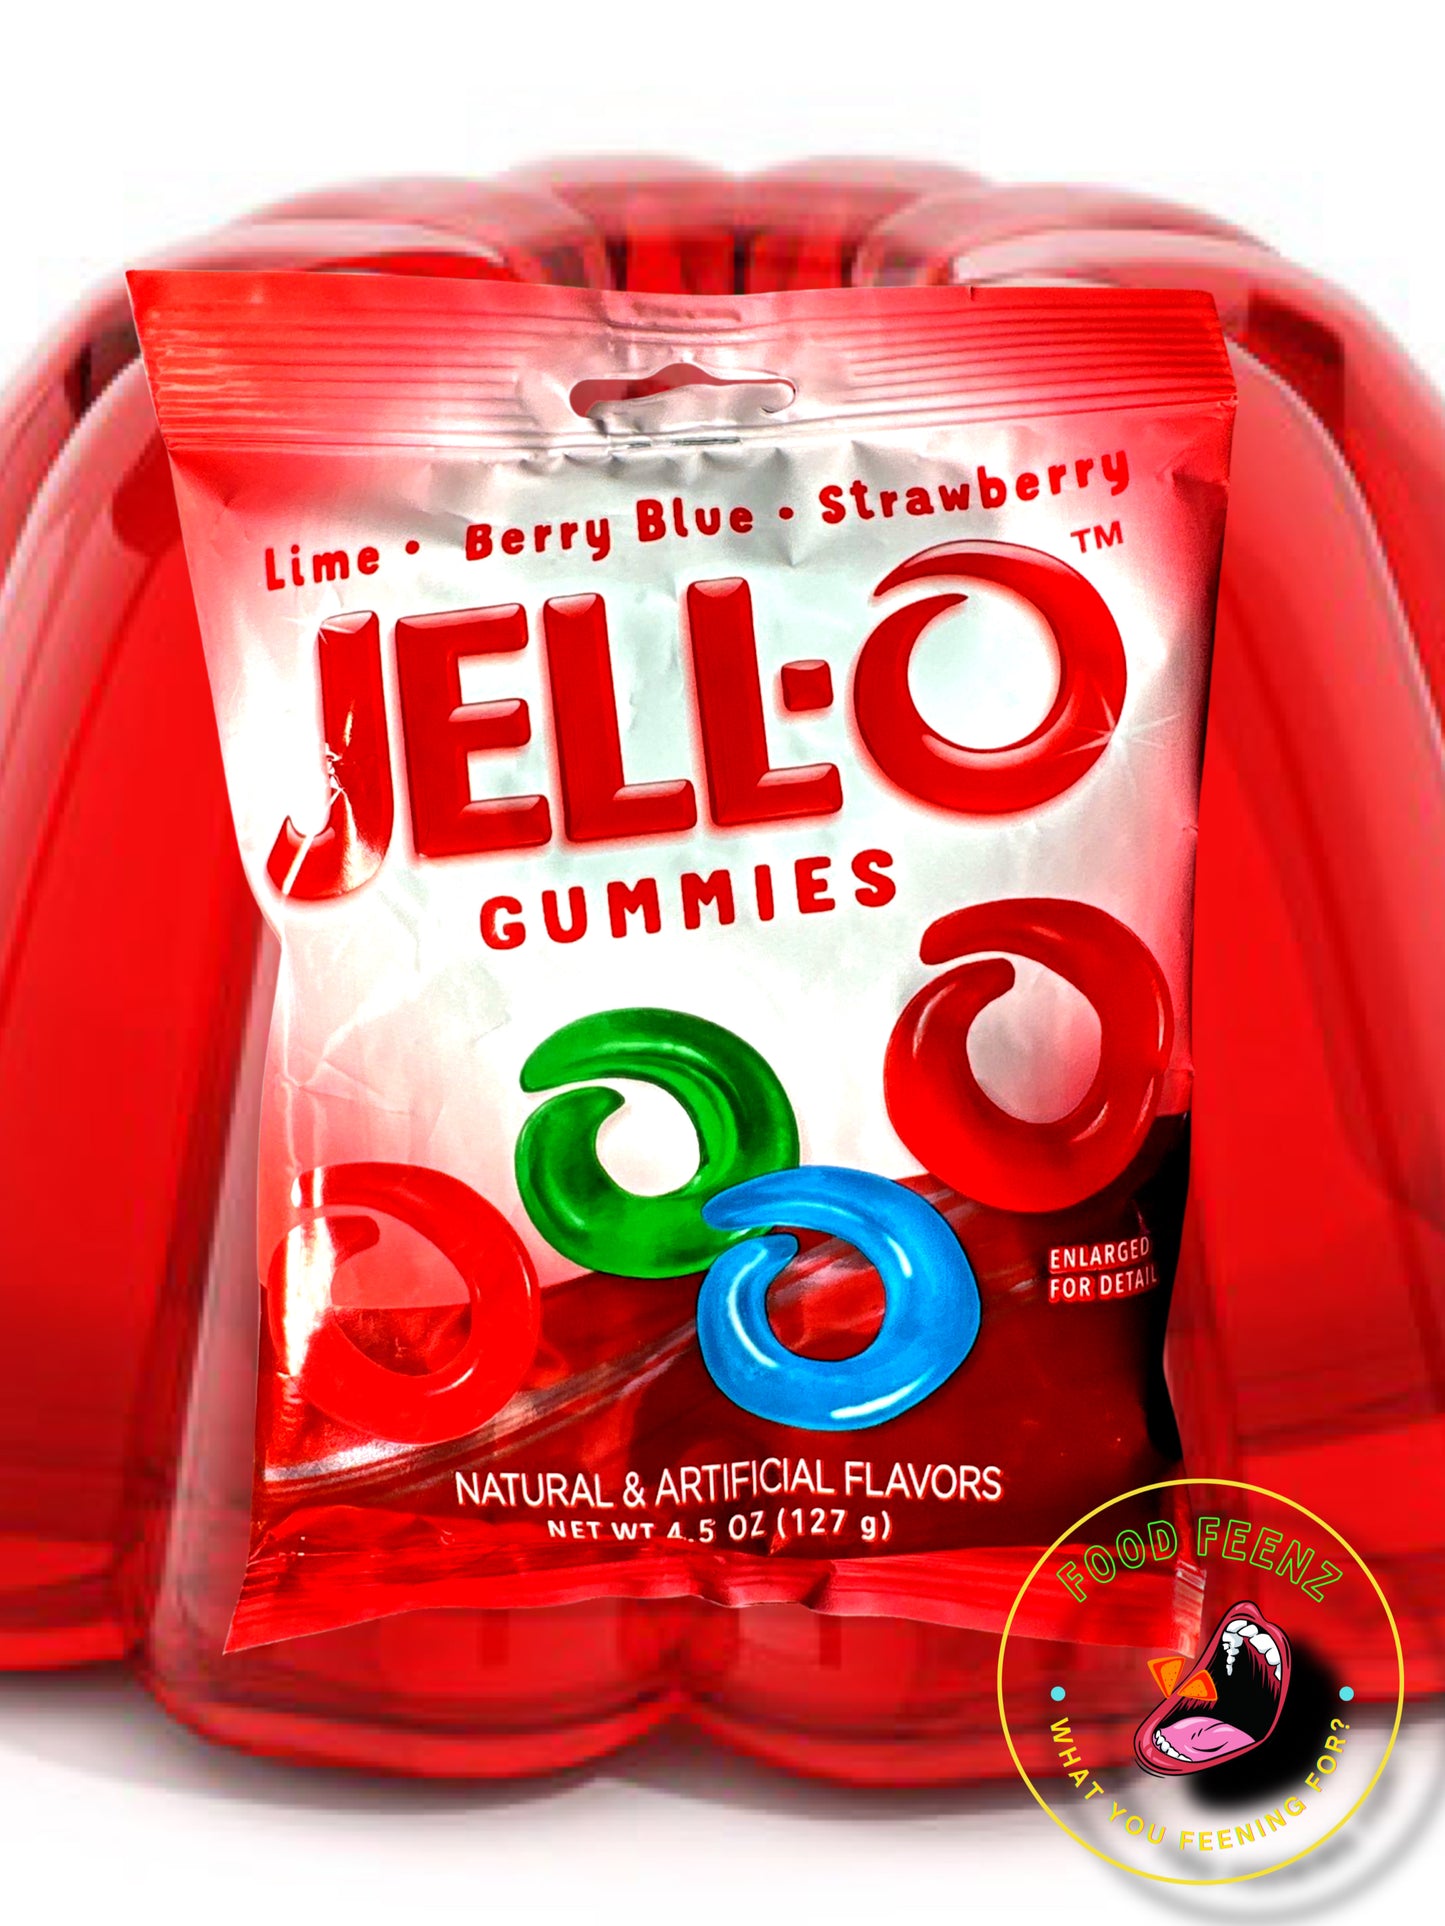 Jell-o Gummies (Brazil)